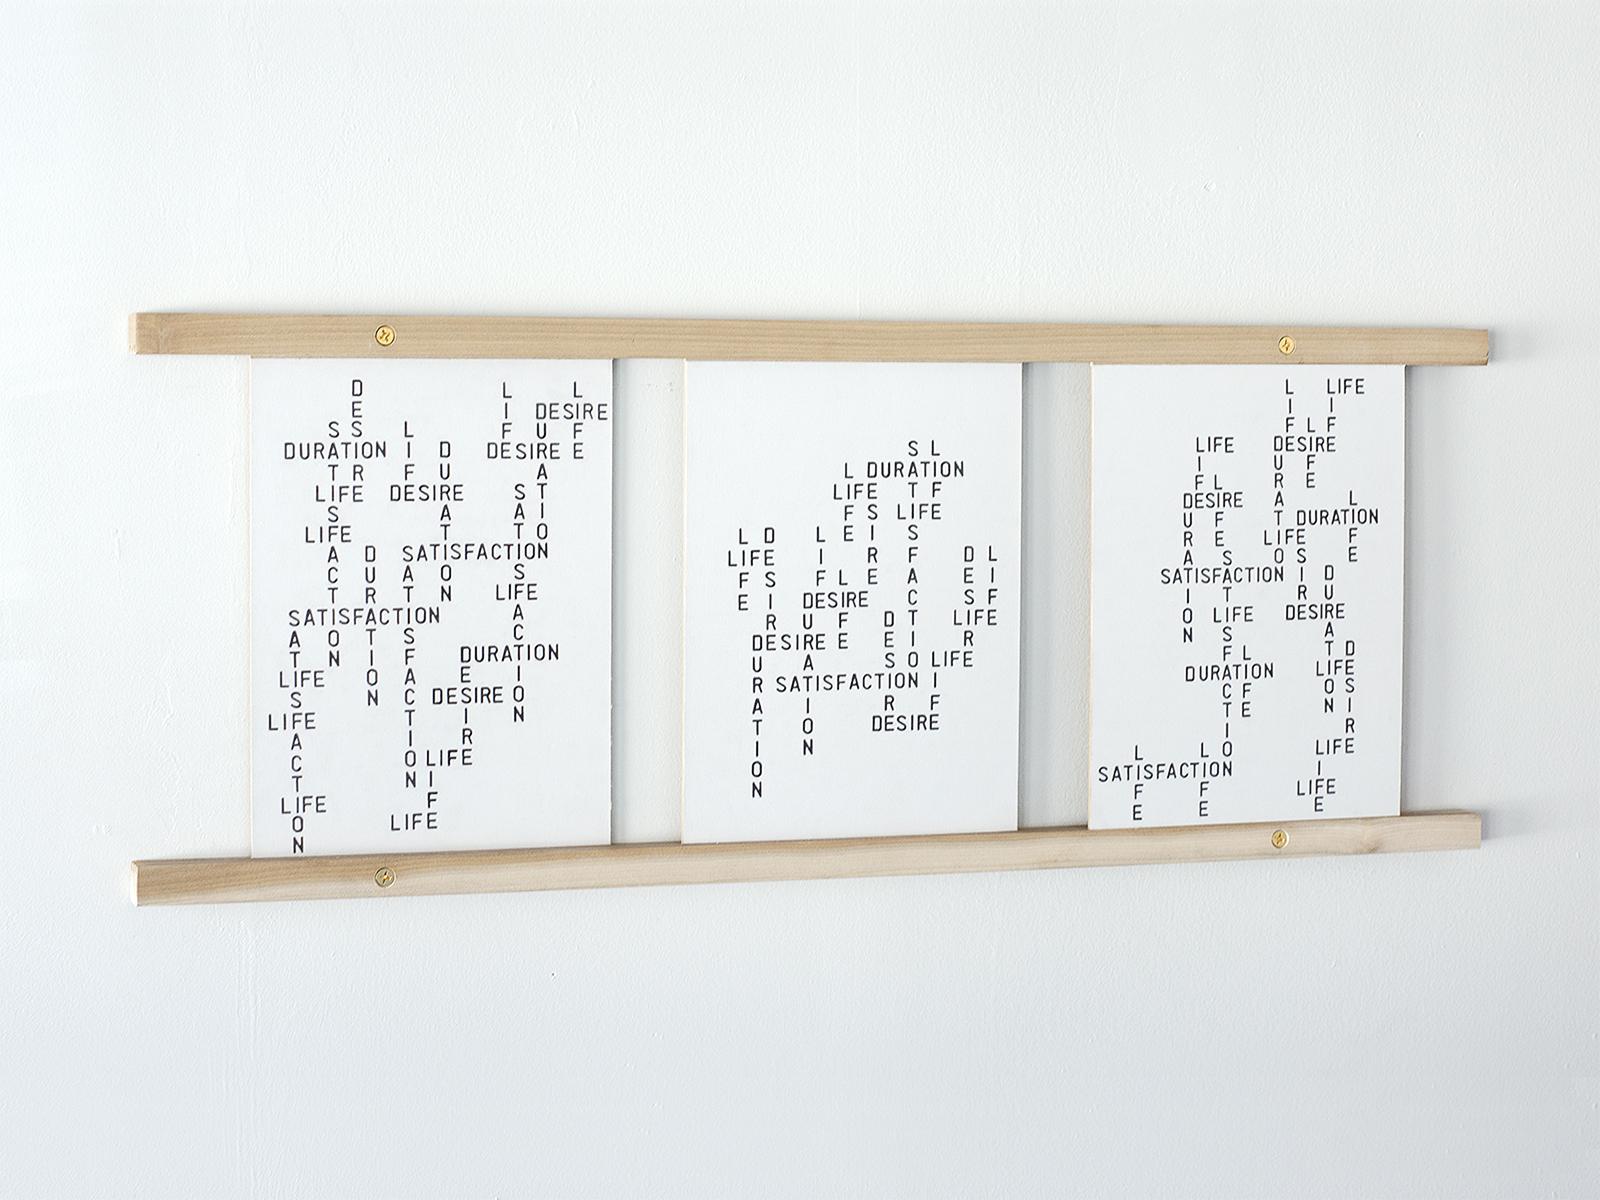 Benoit-Delaunay-artiste-installations-2013-A Set of Valuable Skills-life desire-01